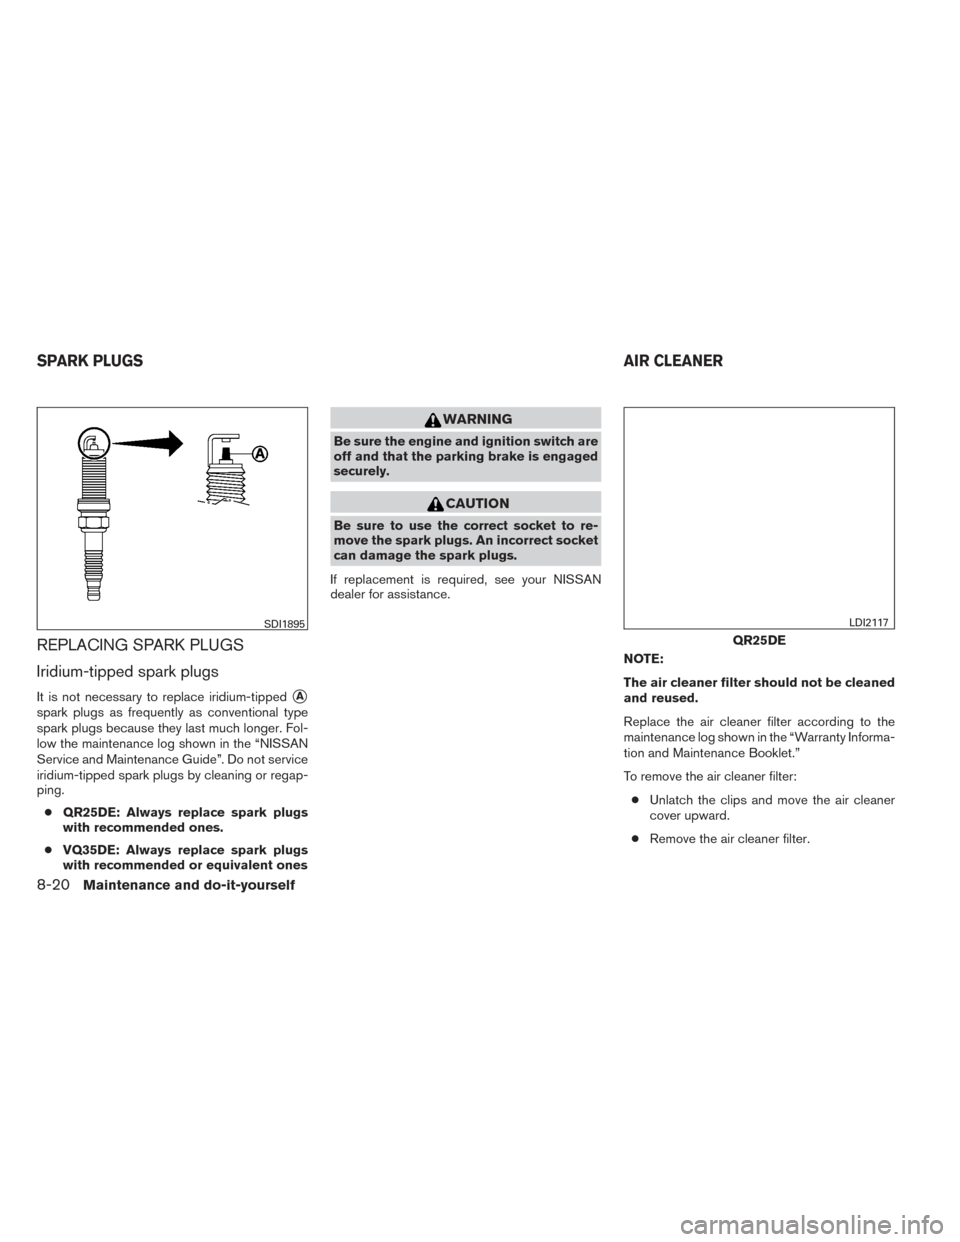 NISSAN ALTIMA 2014 L33 / 5.G Service Manual REPLACING SPARK PLUGS
Iridium-tipped spark plugs
It is not necessary to replace iridium-tippedA
spark plugs as frequently as conventional type
spark plugs because they last much longer. Fol-
low the 